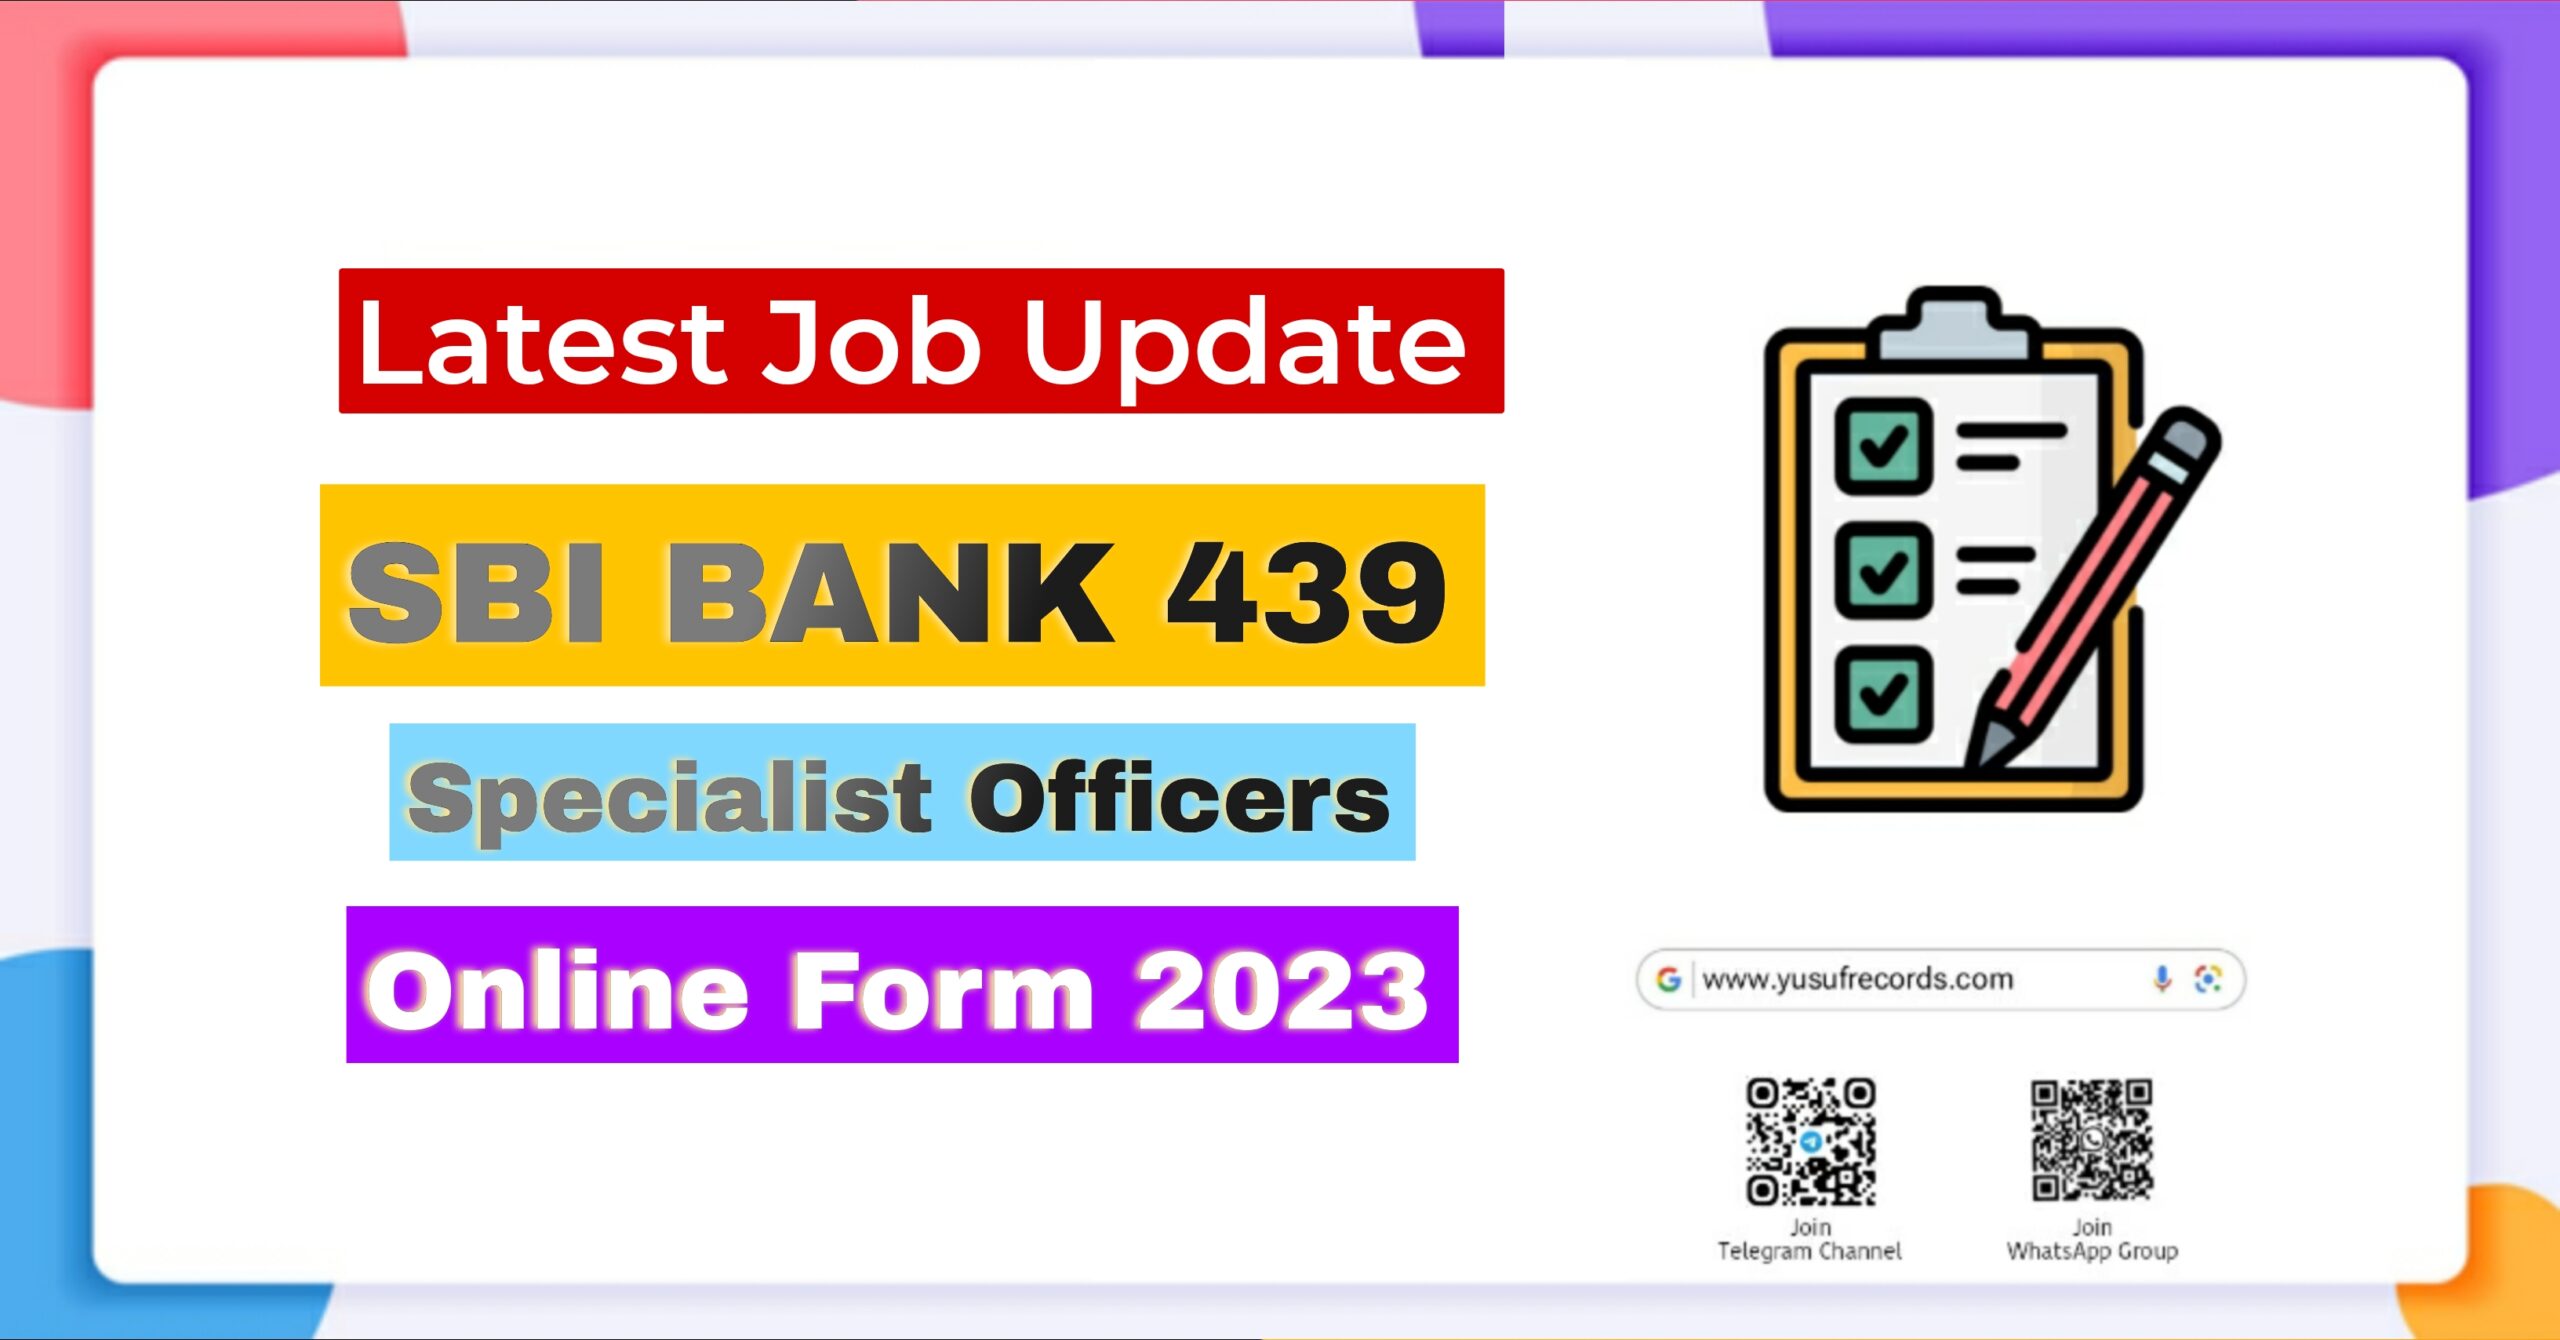 SBI Bank 439 Specialist Officers Online Form yusufrecords.com